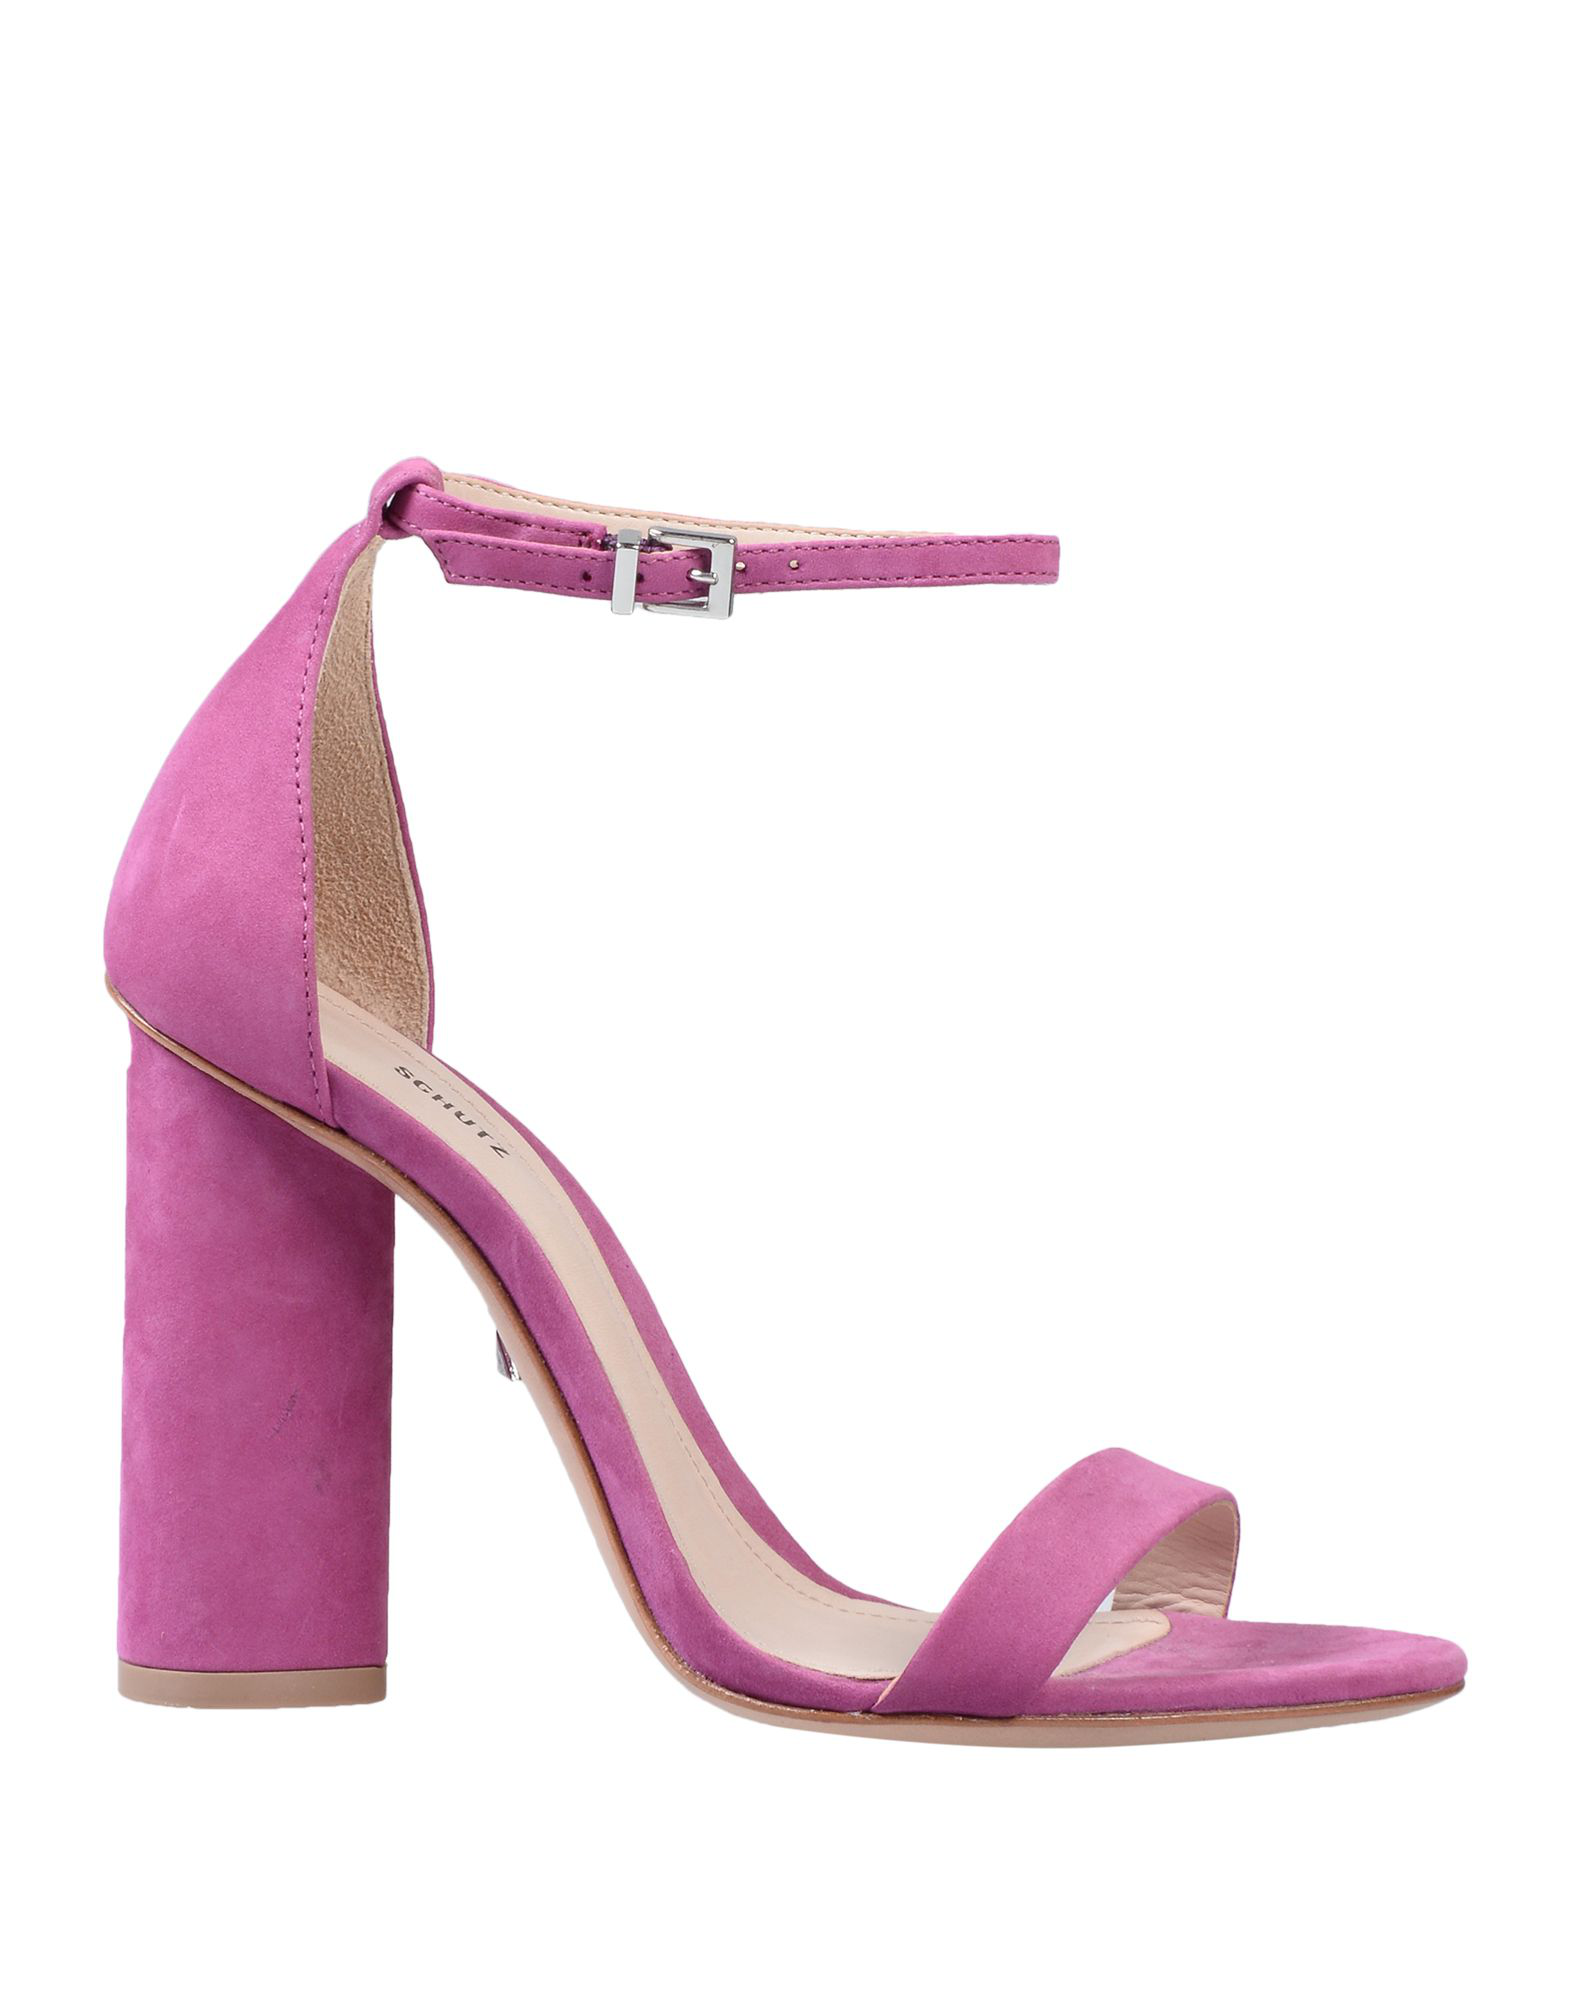 Schutz Sandals In Light Purple | ModeSens